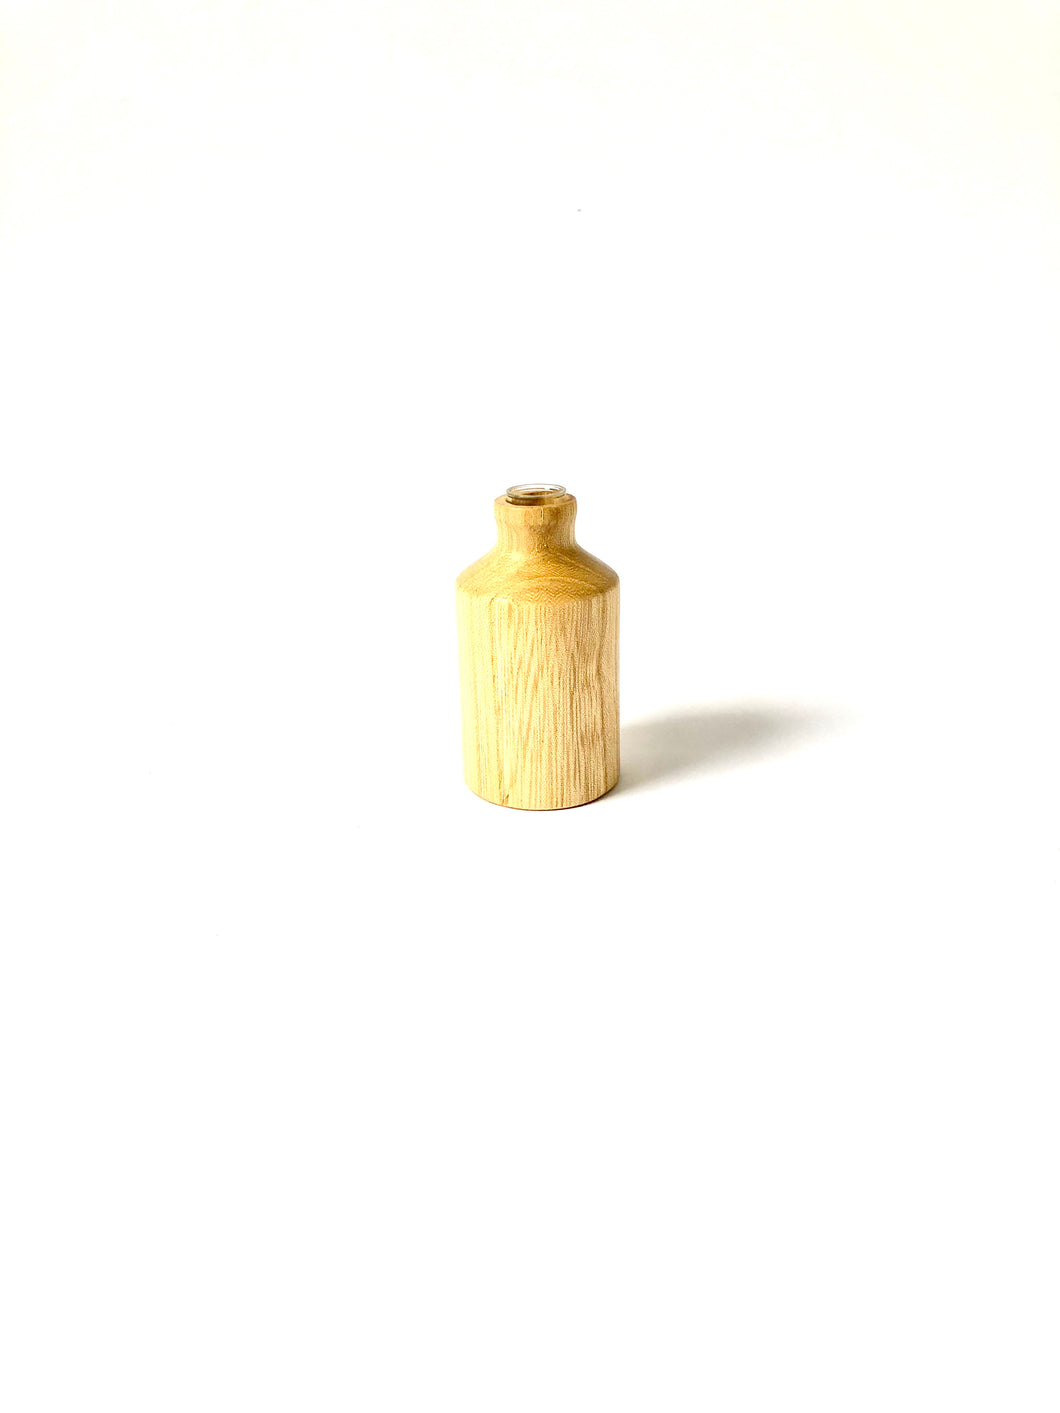 Japanese Handcrafted Wooden Miniature Vase Cherry Tree - 桜のチビ輪挿し